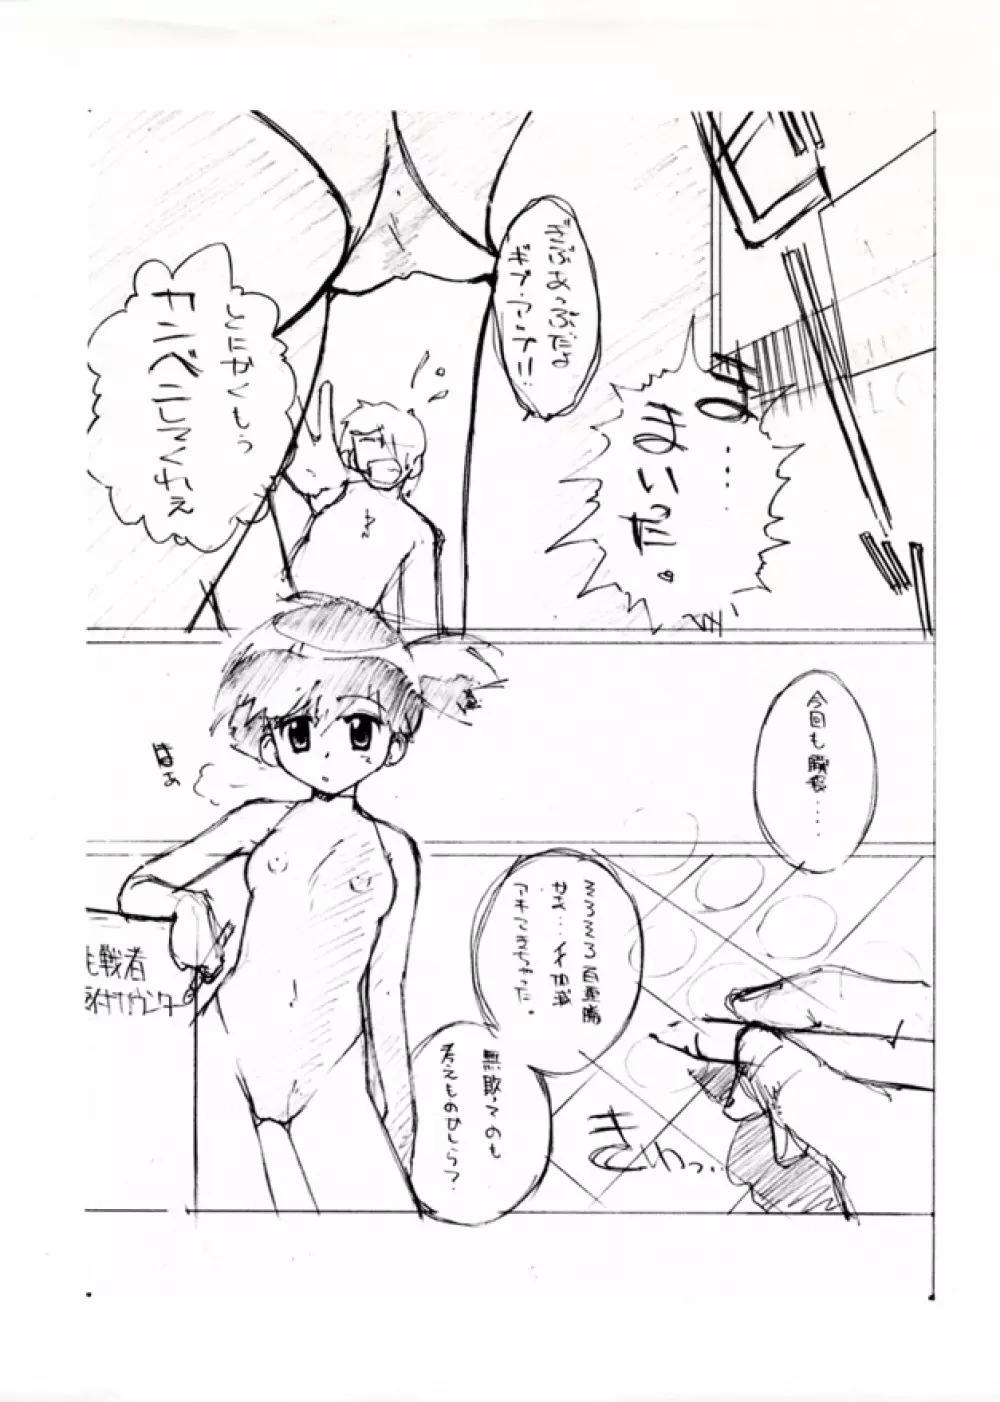 KASUMIX XPLOSION Kasumi Comic part5 - page2